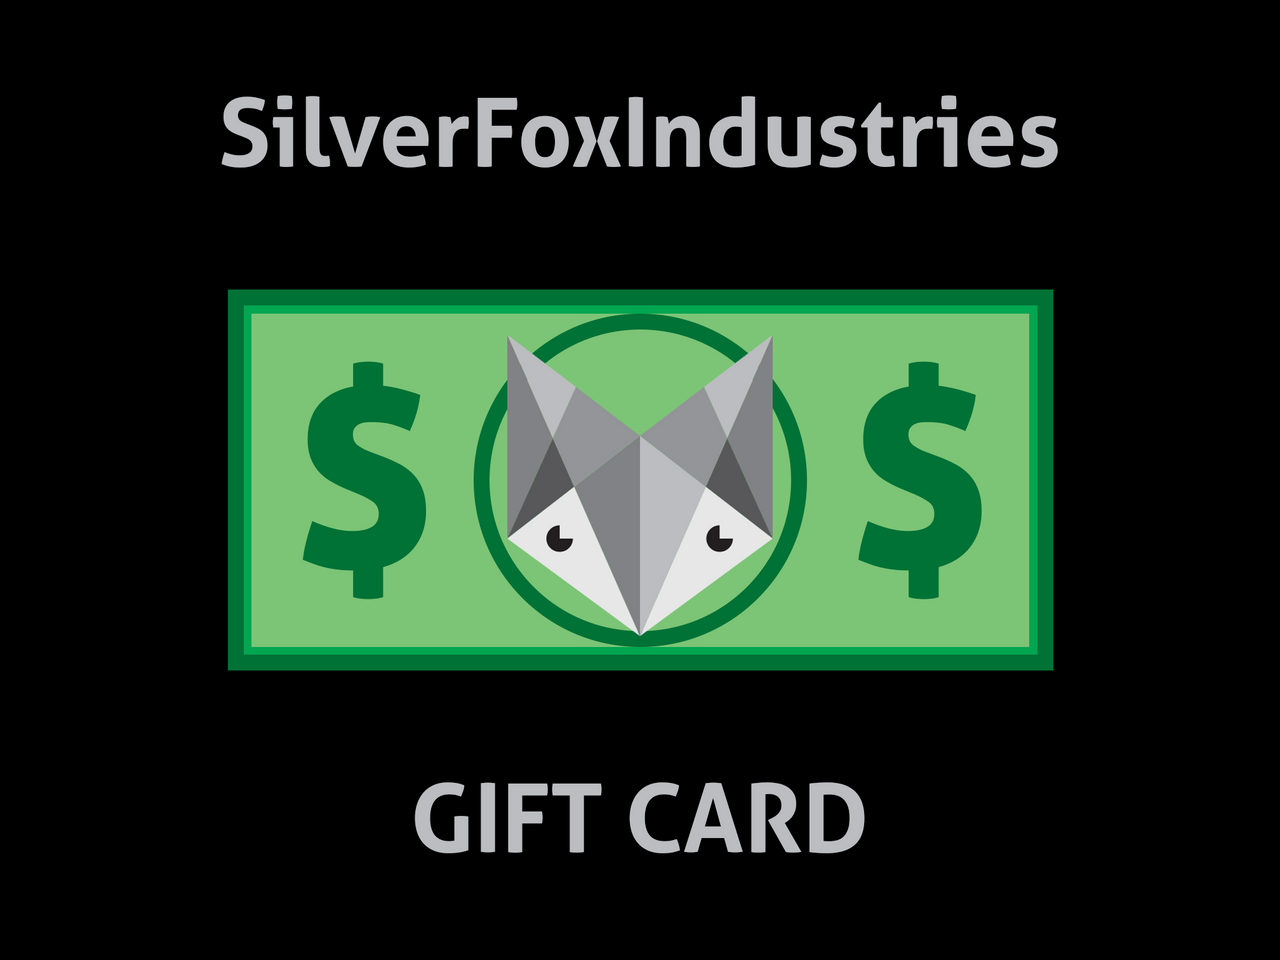 SilverFoxIndustries Gift Card